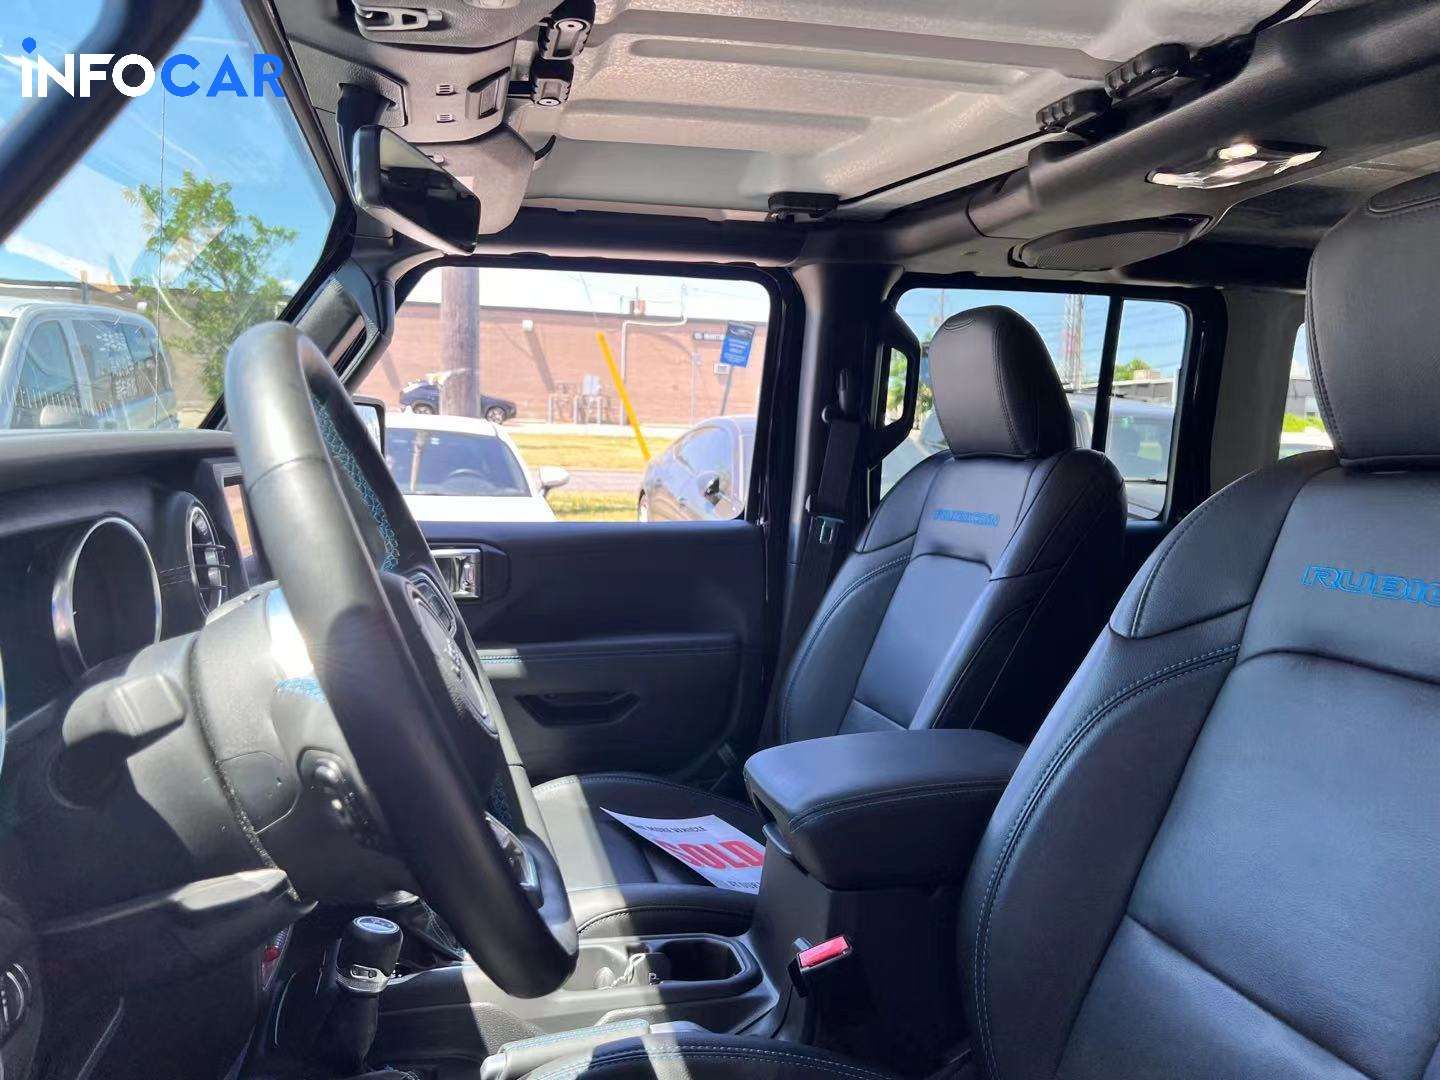 2021 Jeep Wrangler 4XE Rubicon - INFOCAR - Toronto Auto Trading Platform